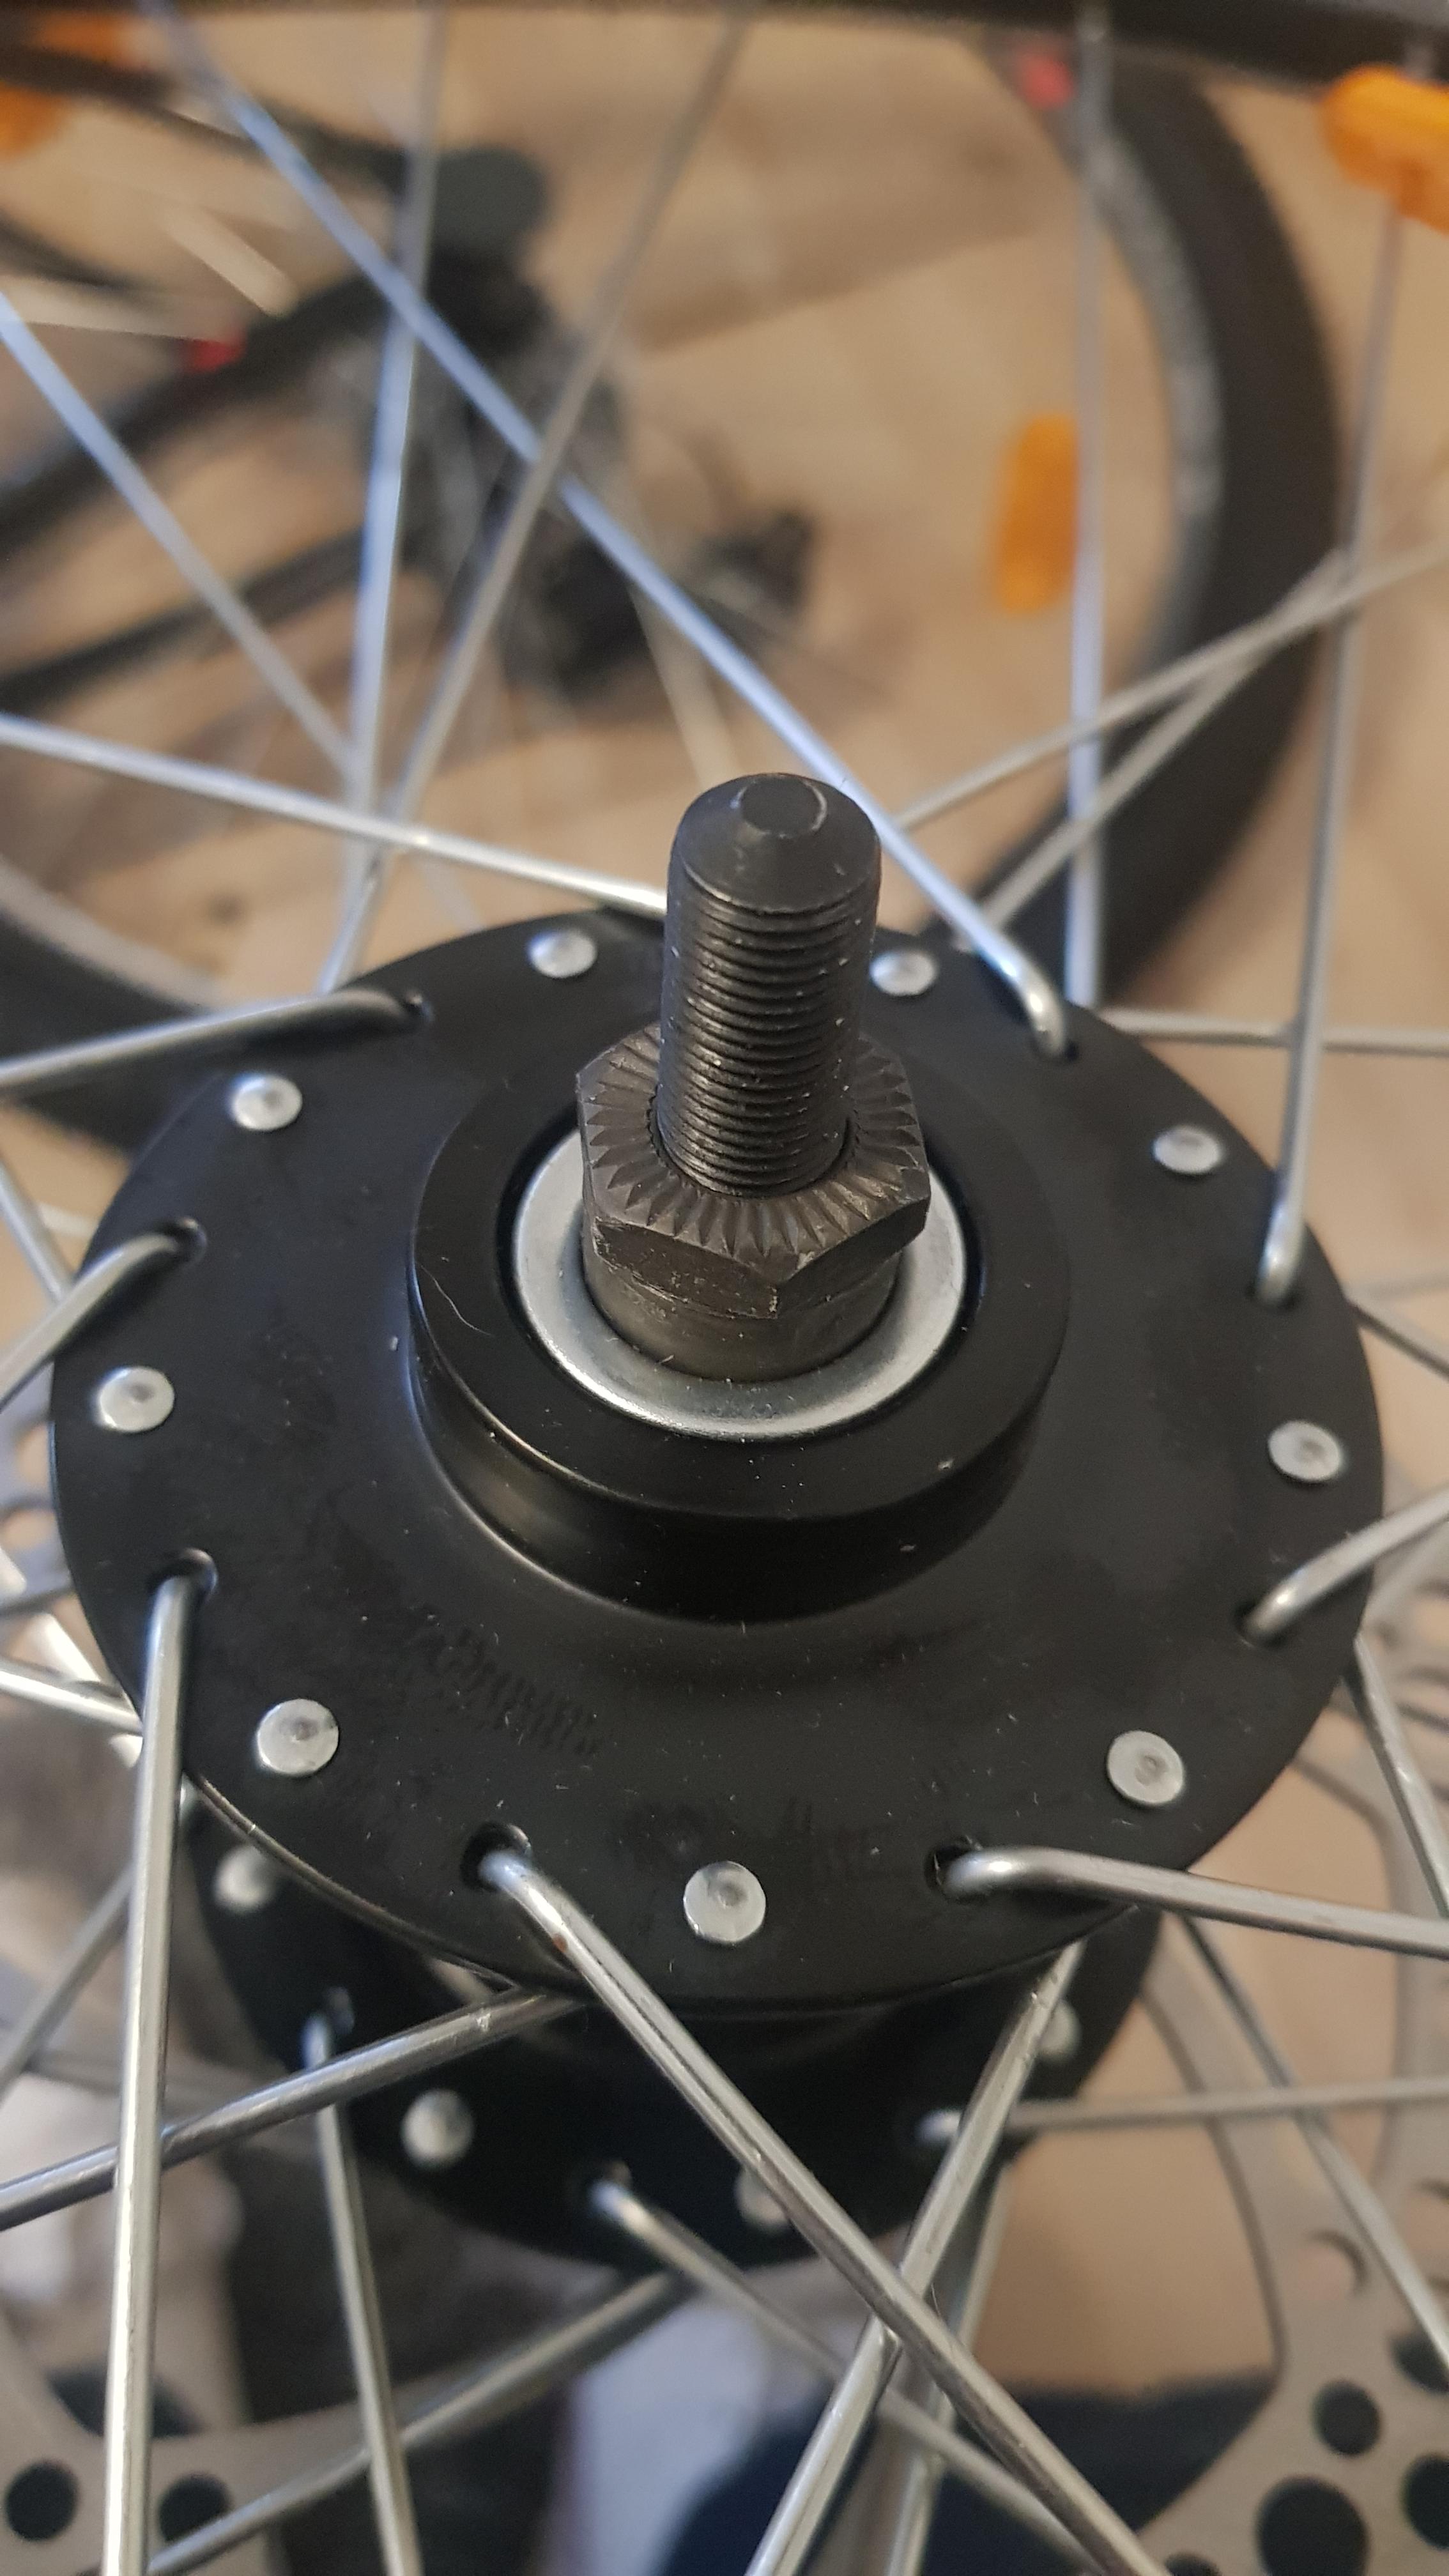 Fahrrad Vorderrad an montieren? (Technik, Reifen